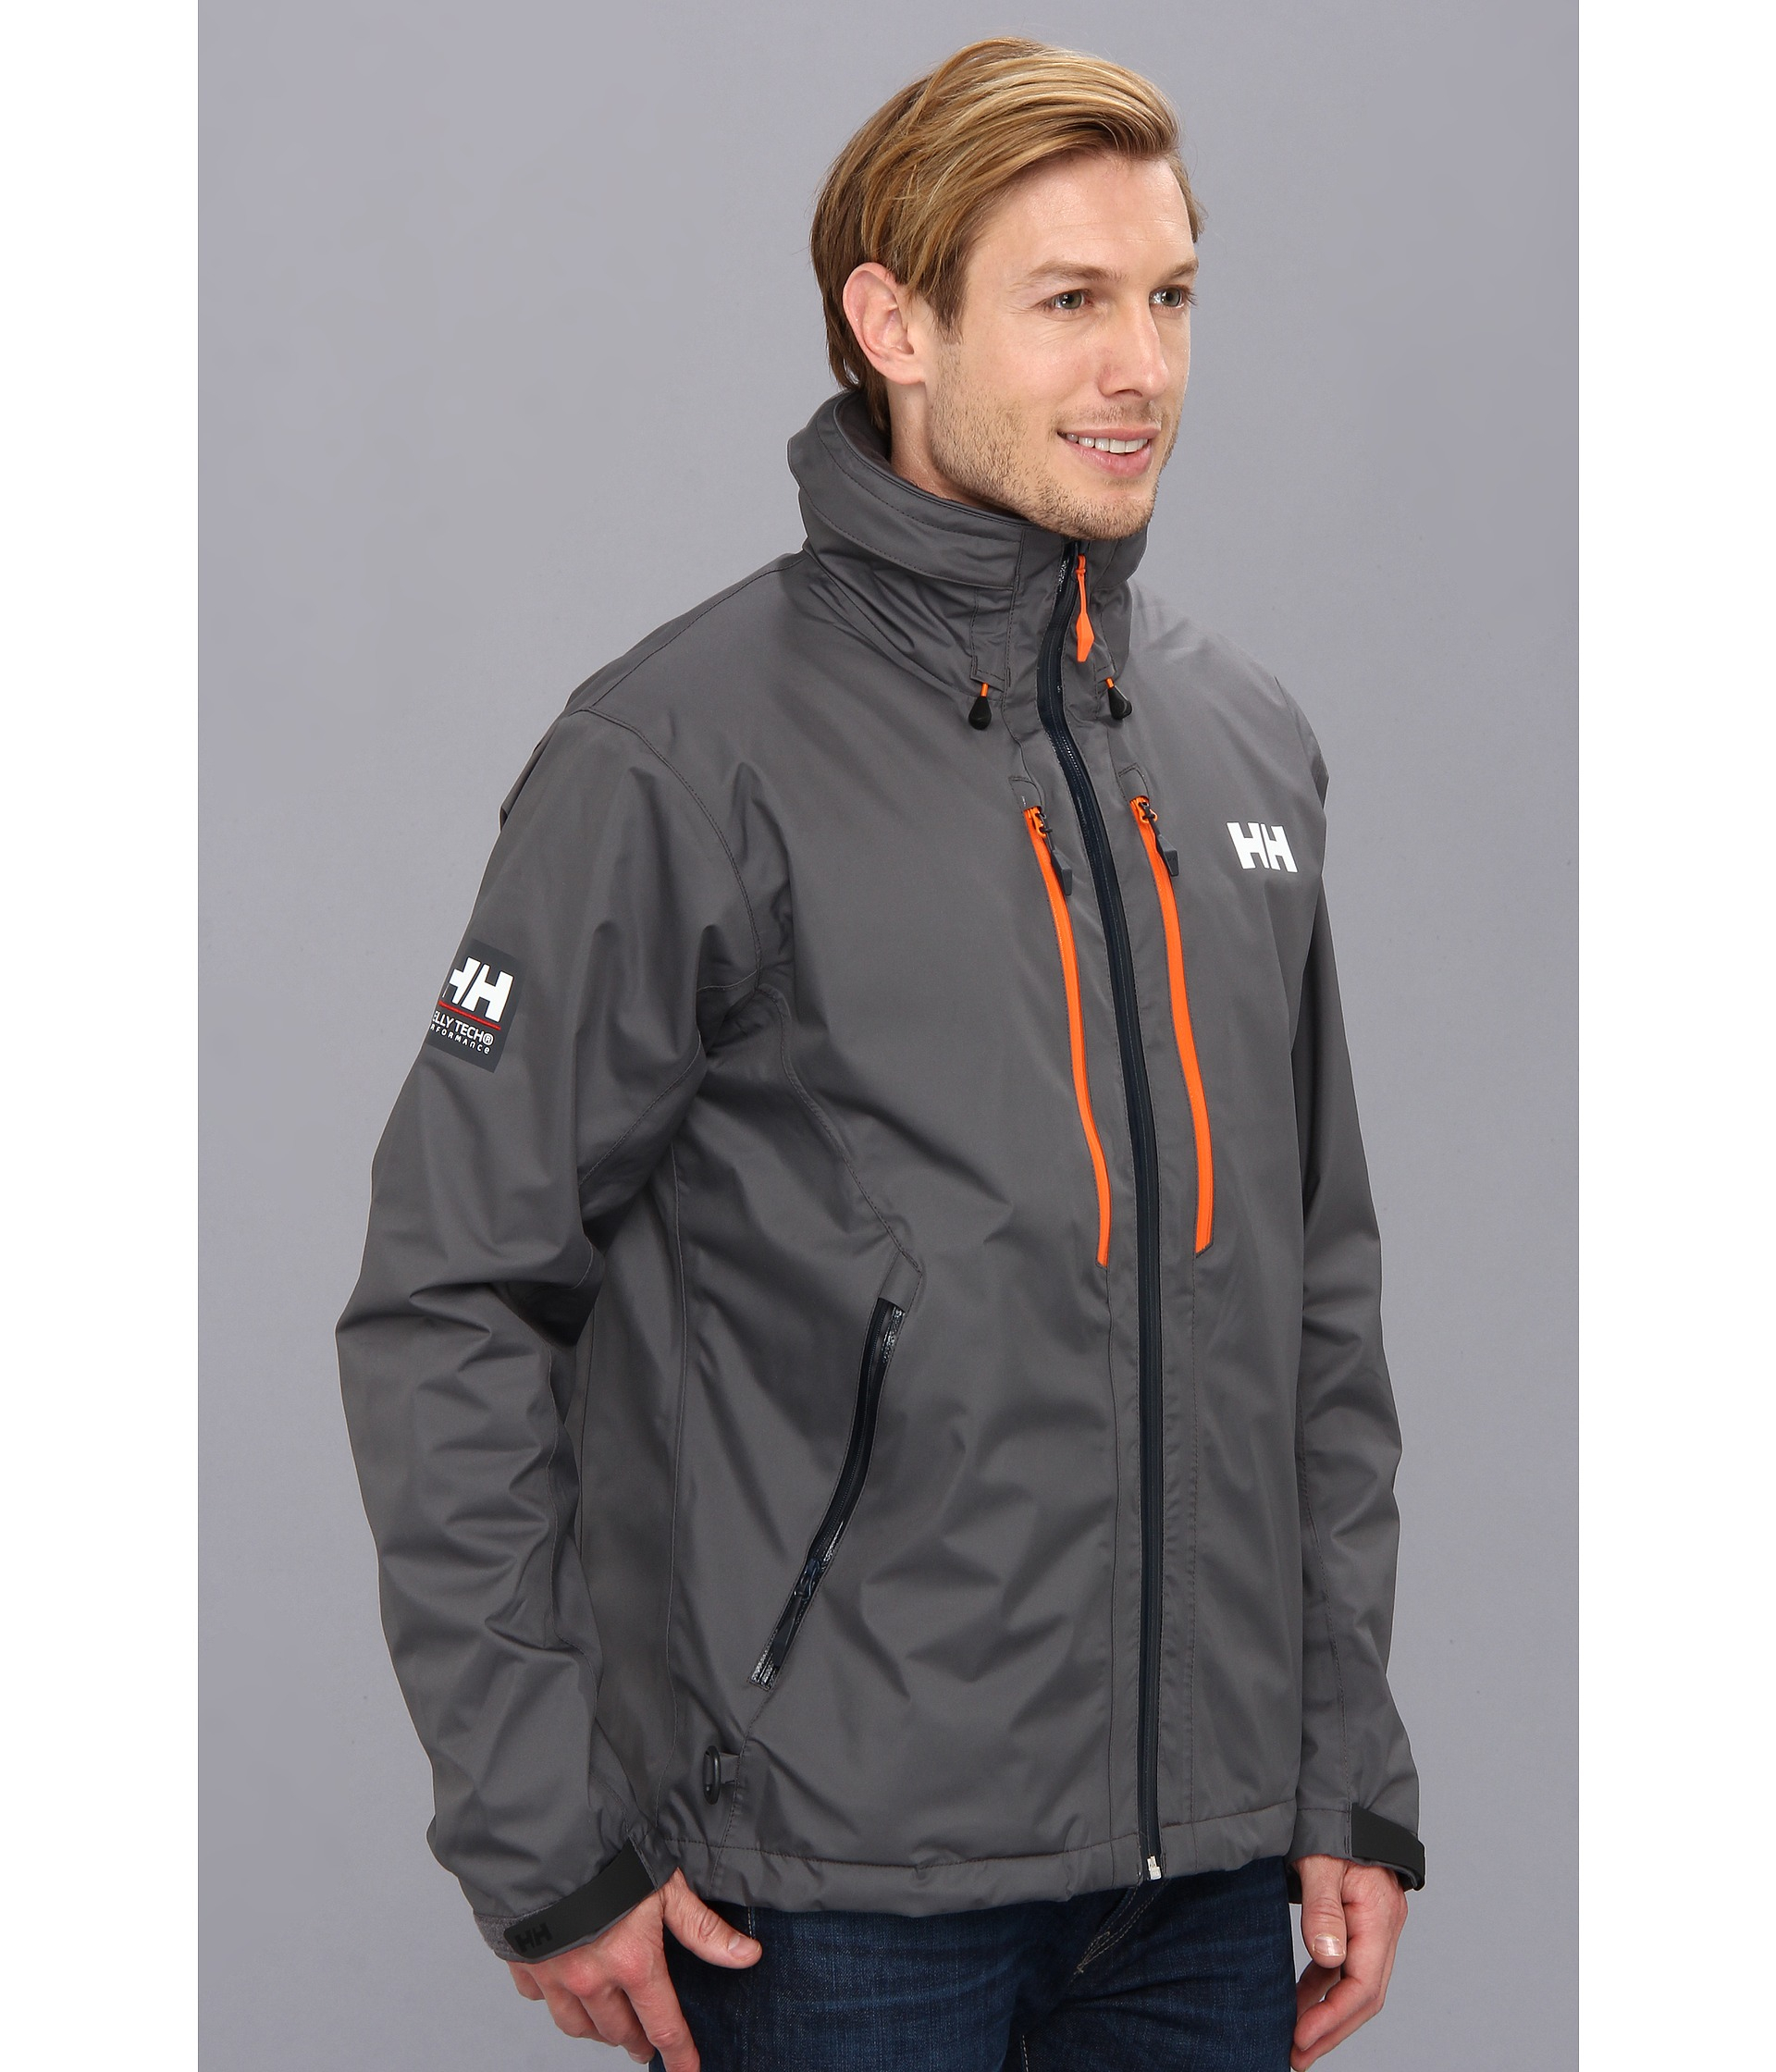 Helly Hansen Crew H2flow Jacket in Charcoal (Gray) for Men - Lyst